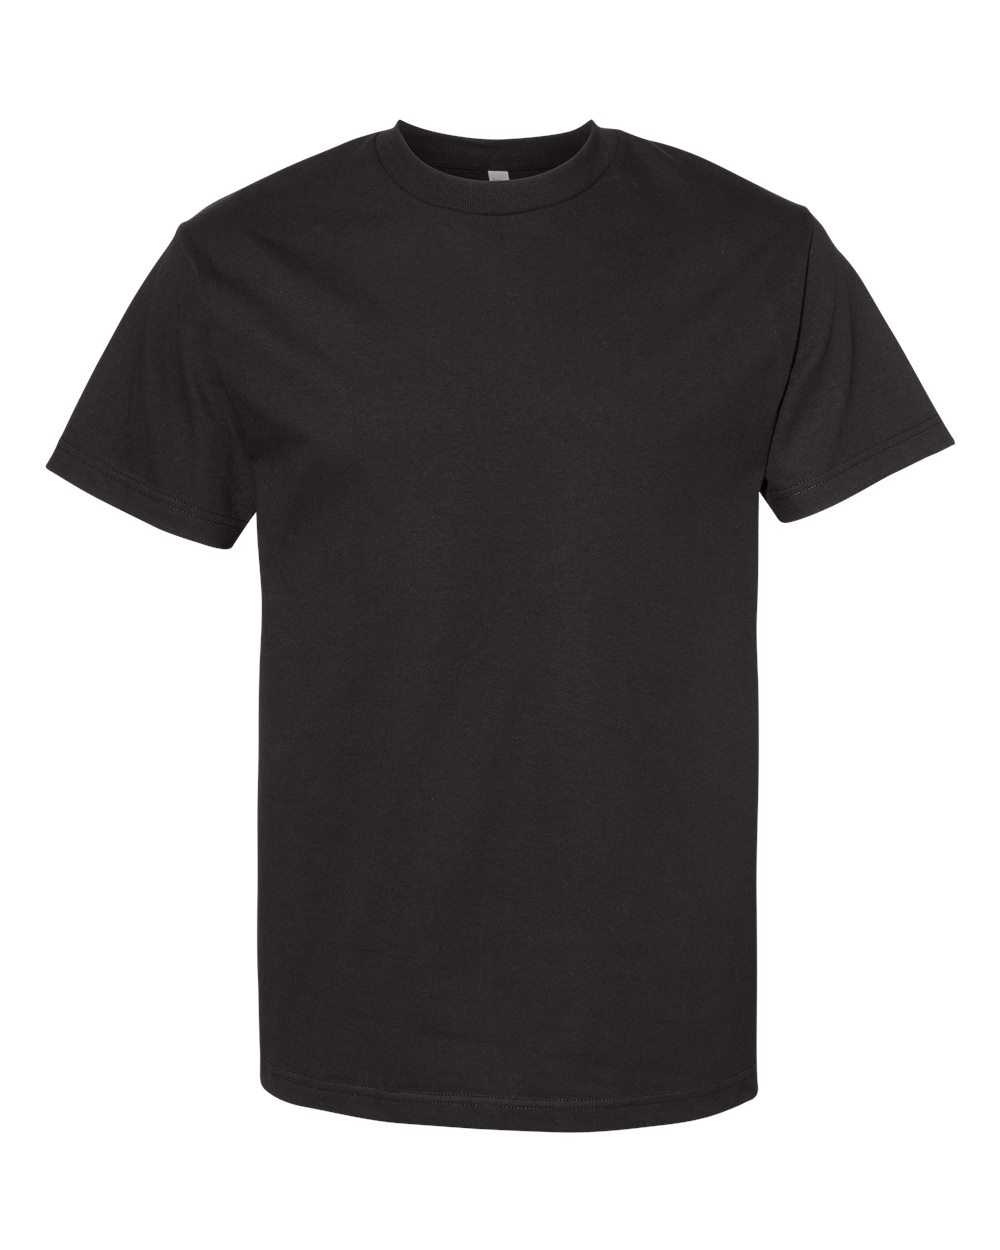 American Apparel 1301 Unisex Heavyweight Cotton T-Shirt - Black - HIT a Double